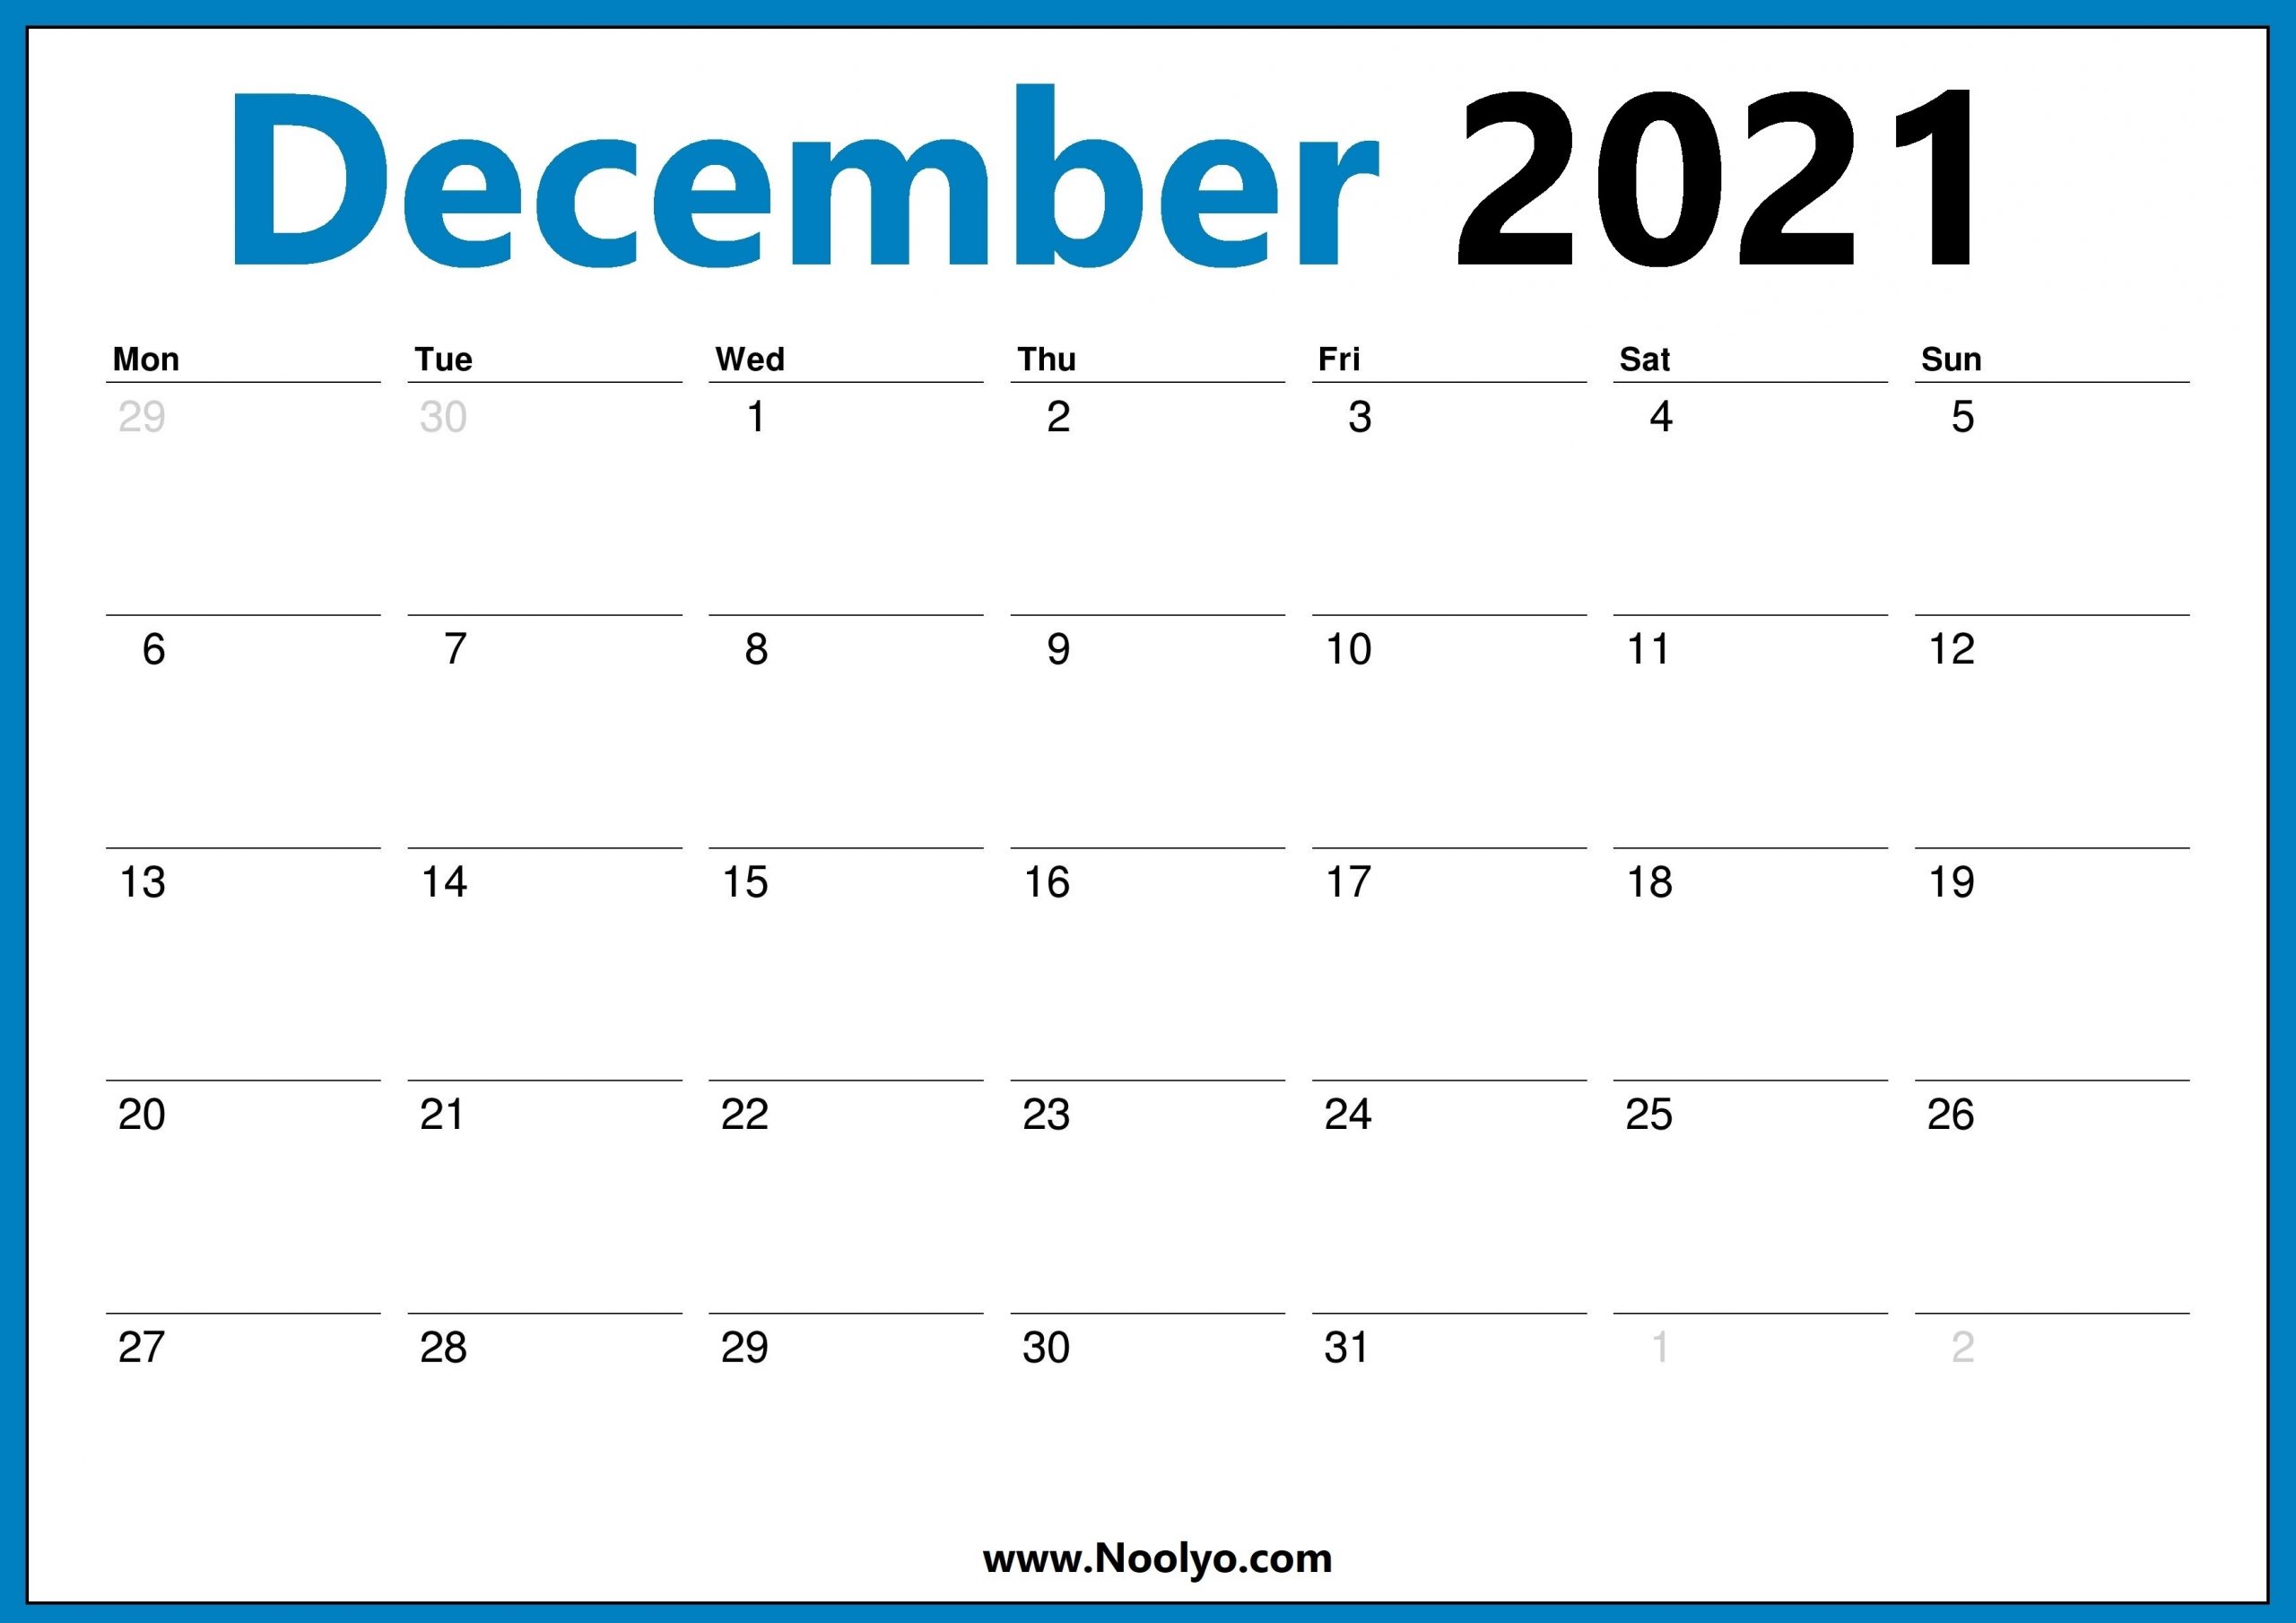 Pick December 2021 Starts Monday